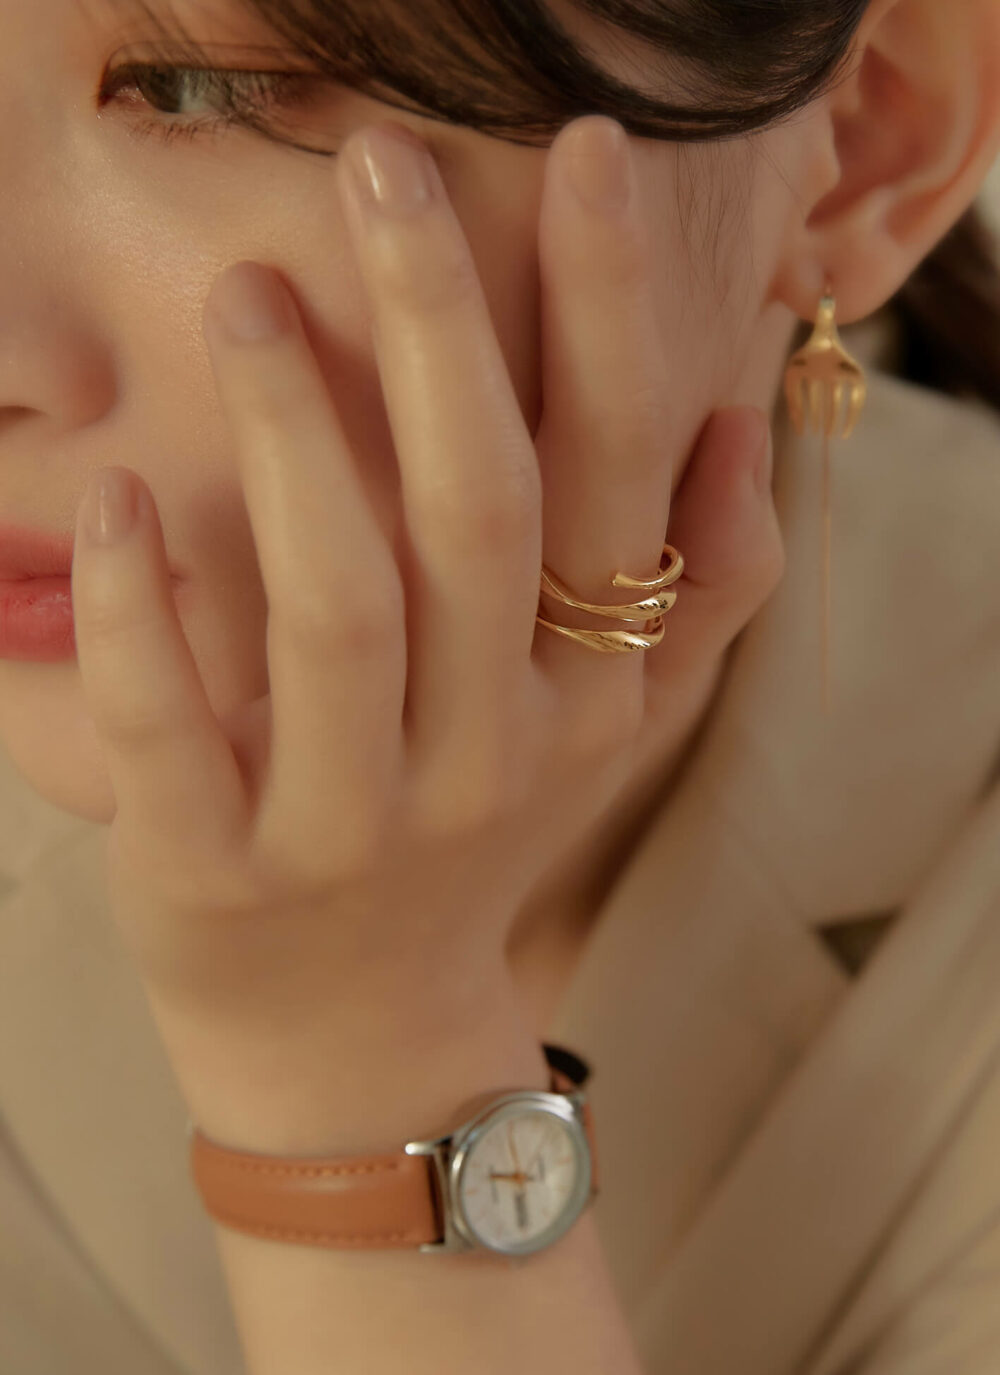 Eco安珂,韓國飾品,韓國戒指,多圈戒指,寬版戒指,開口戒指,個性戒指